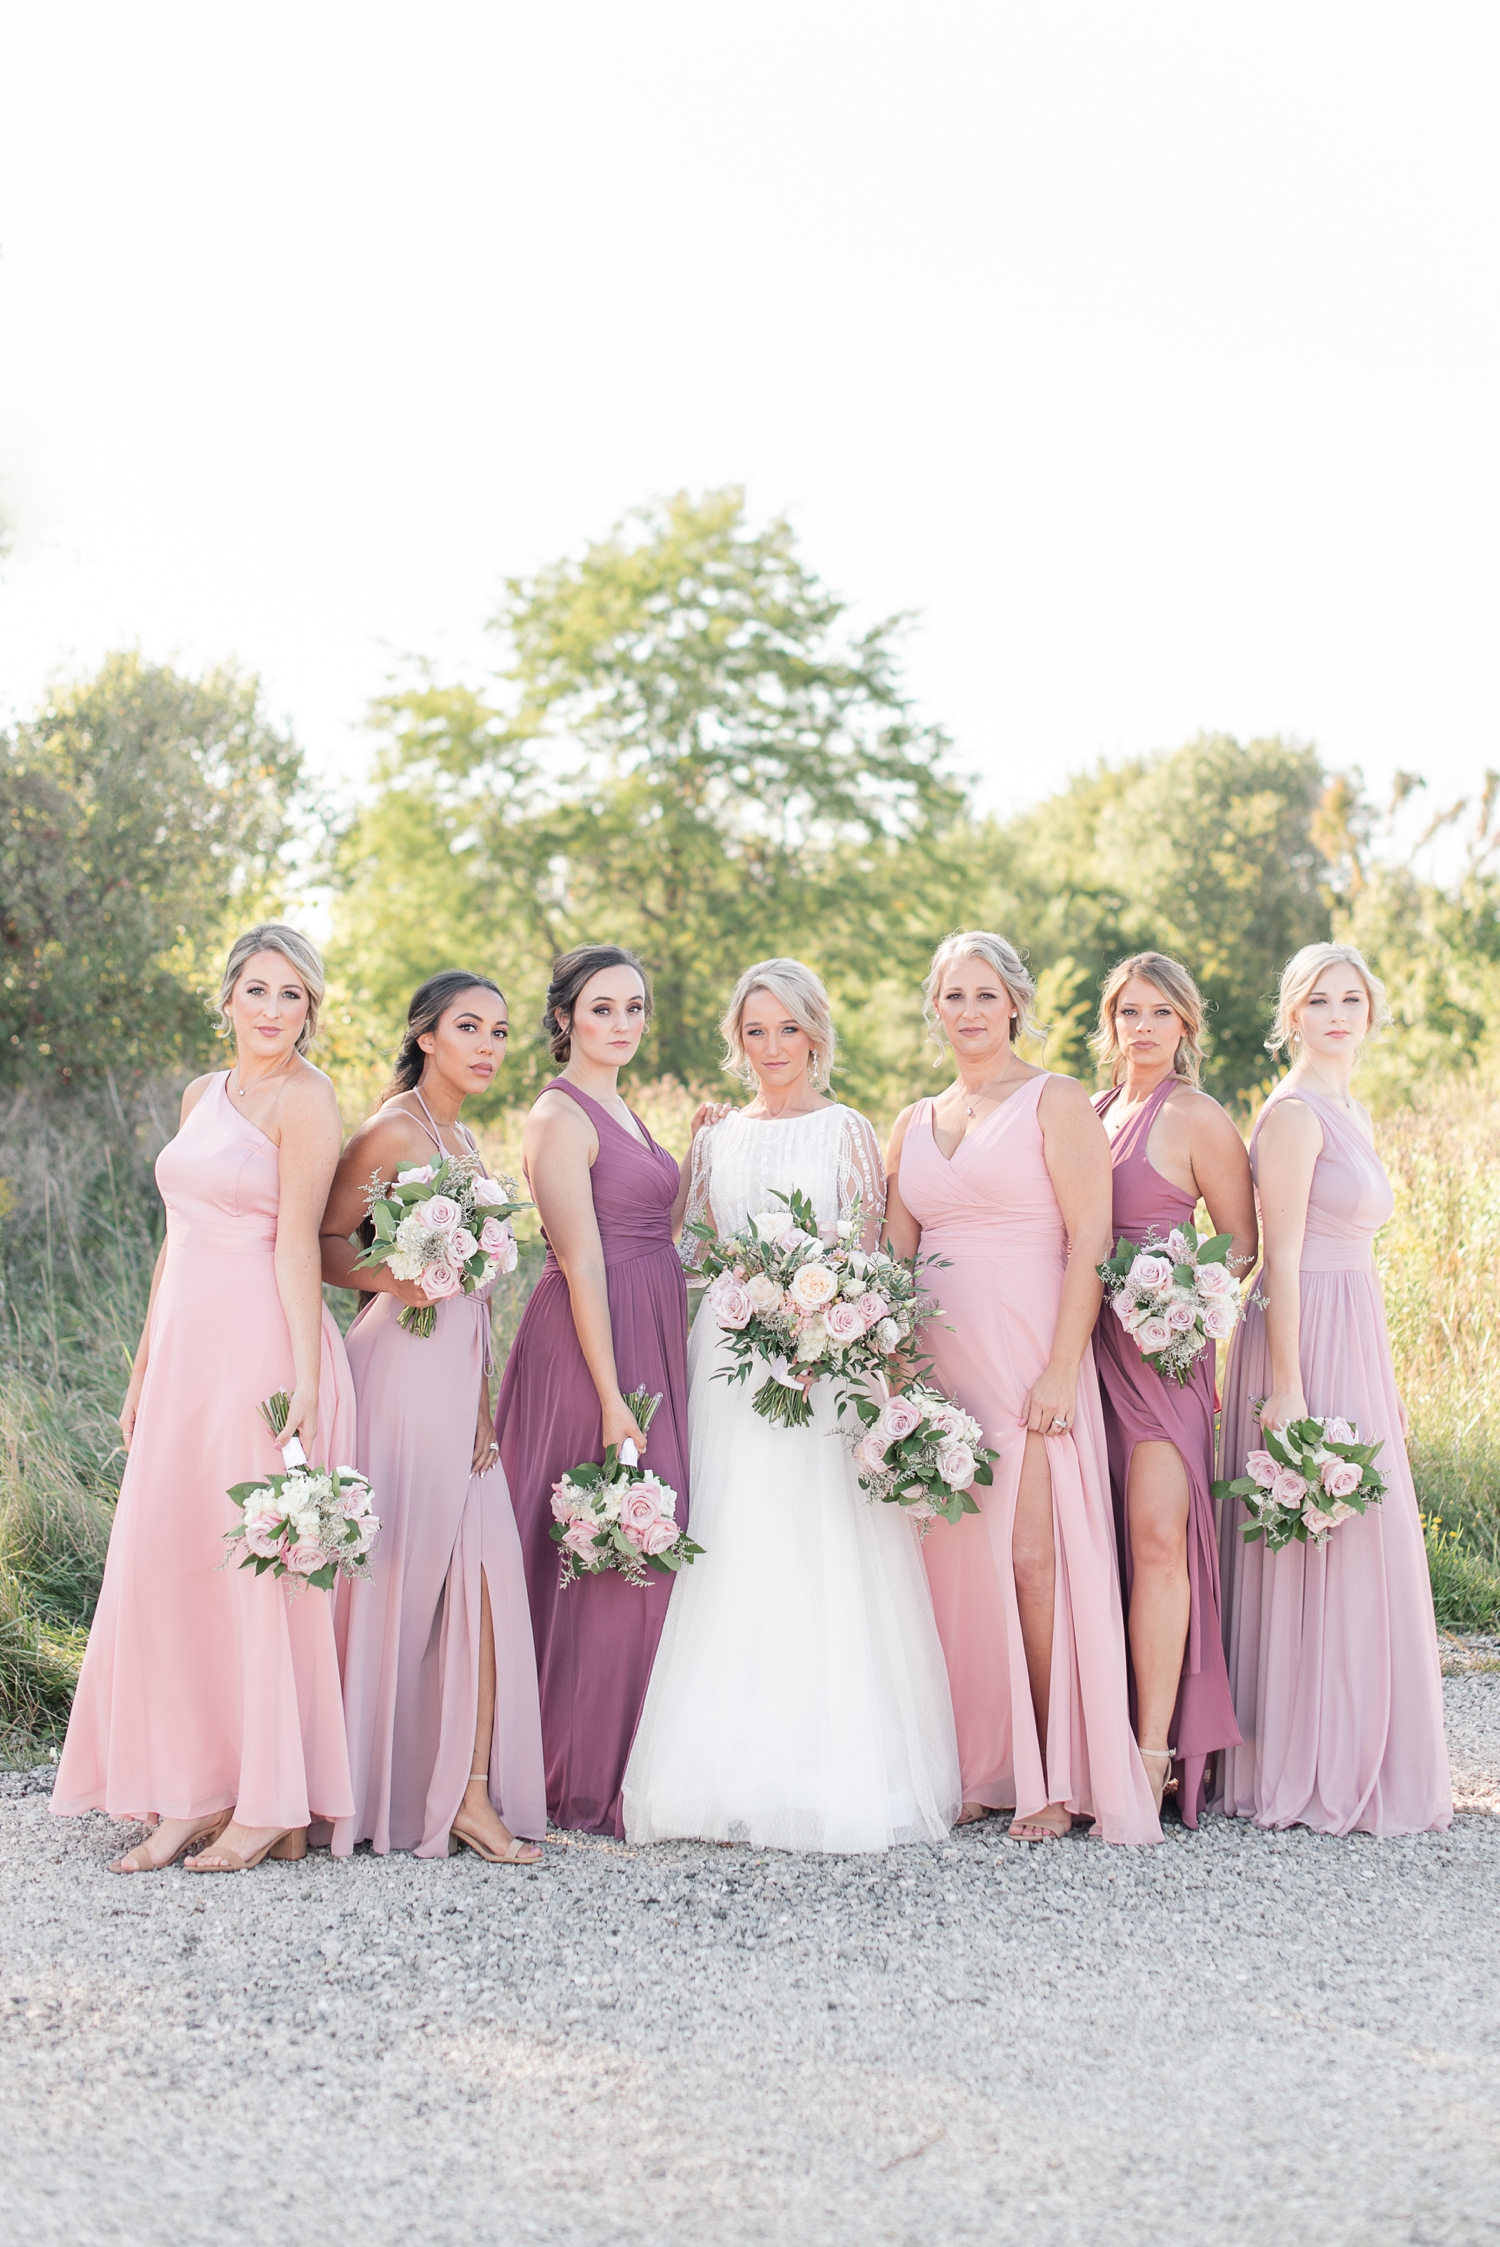 Indiana Wedding Inspiration, Bridesmaids Dresses, Groomsmen Attire and Wedding Bouquet Inspiration #bridesmaidsdresses #weddingbouquets #bridesmaidsflowers